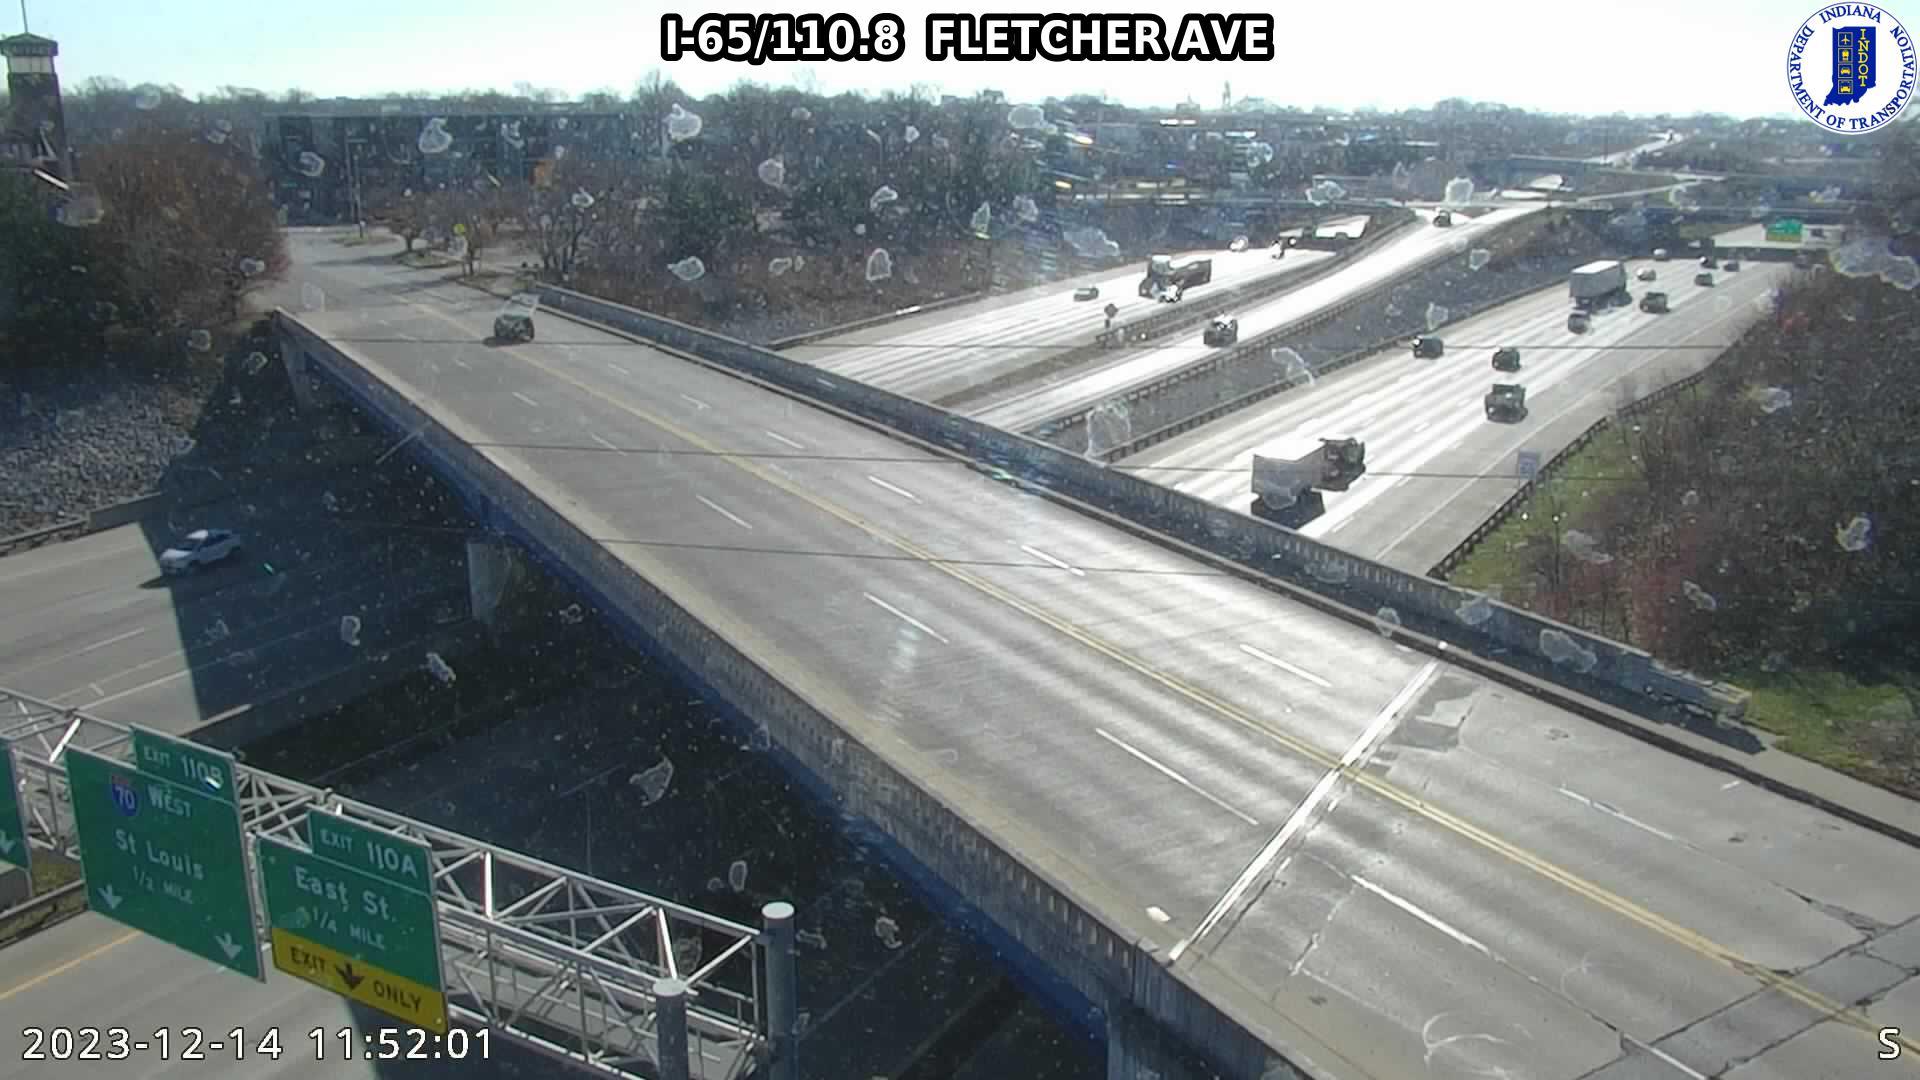 Traffic Cam Fletcher Place: I-65: I-65/110.8 FLETCHER AVE